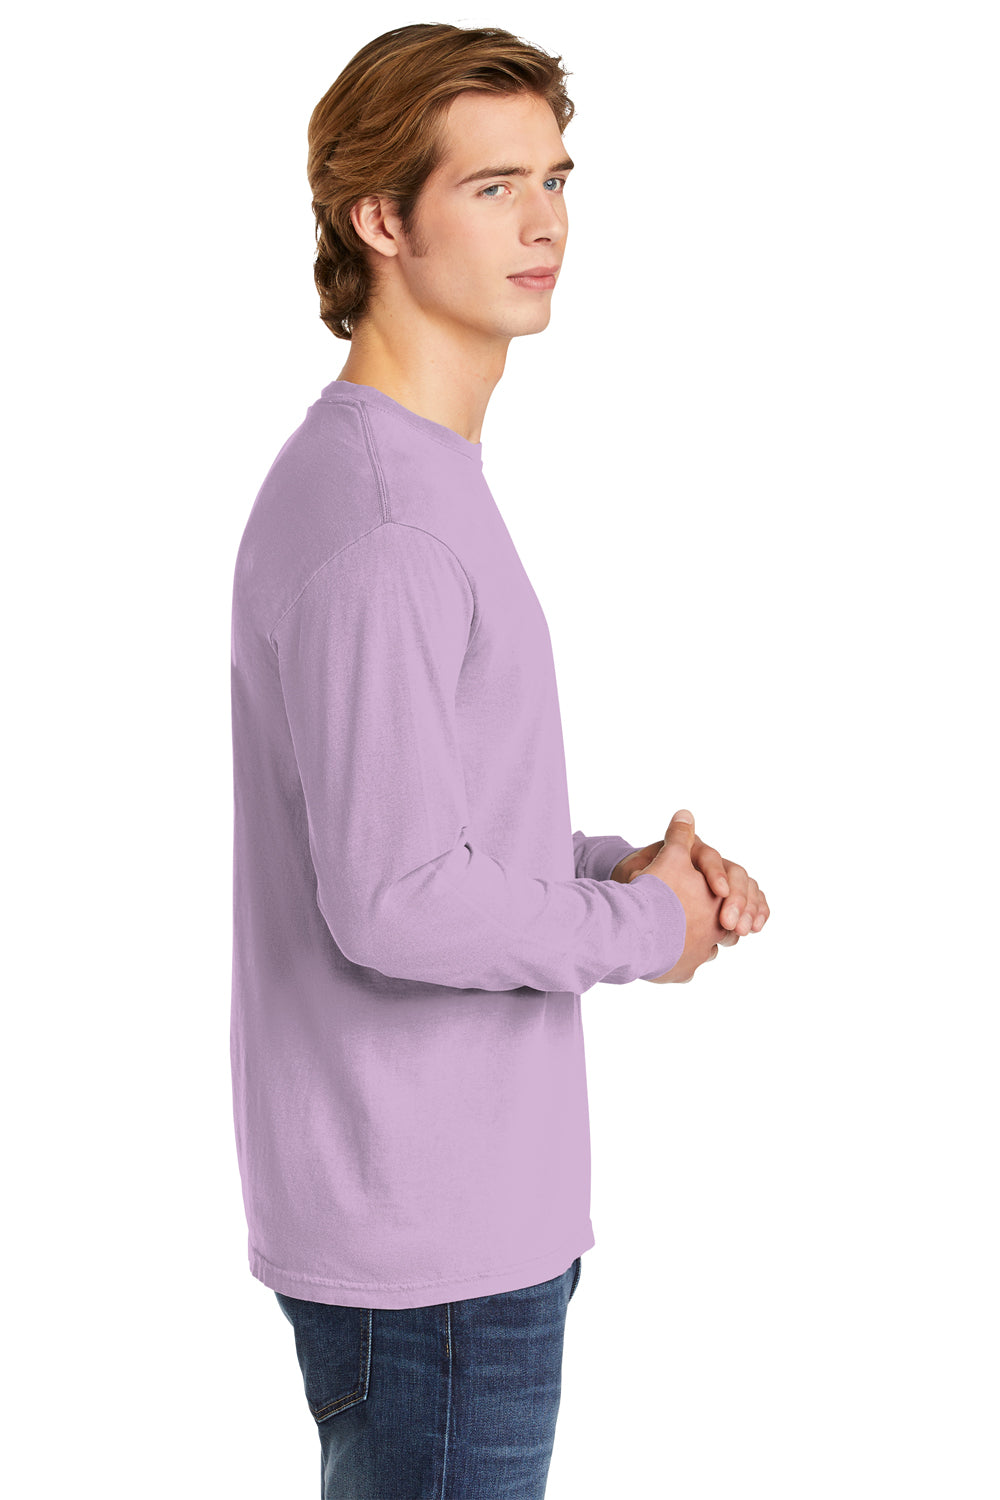 Comfort Colors 6014/C6014 Mens Long Sleeve Crewneck T-Shirt Orchid Purple Side